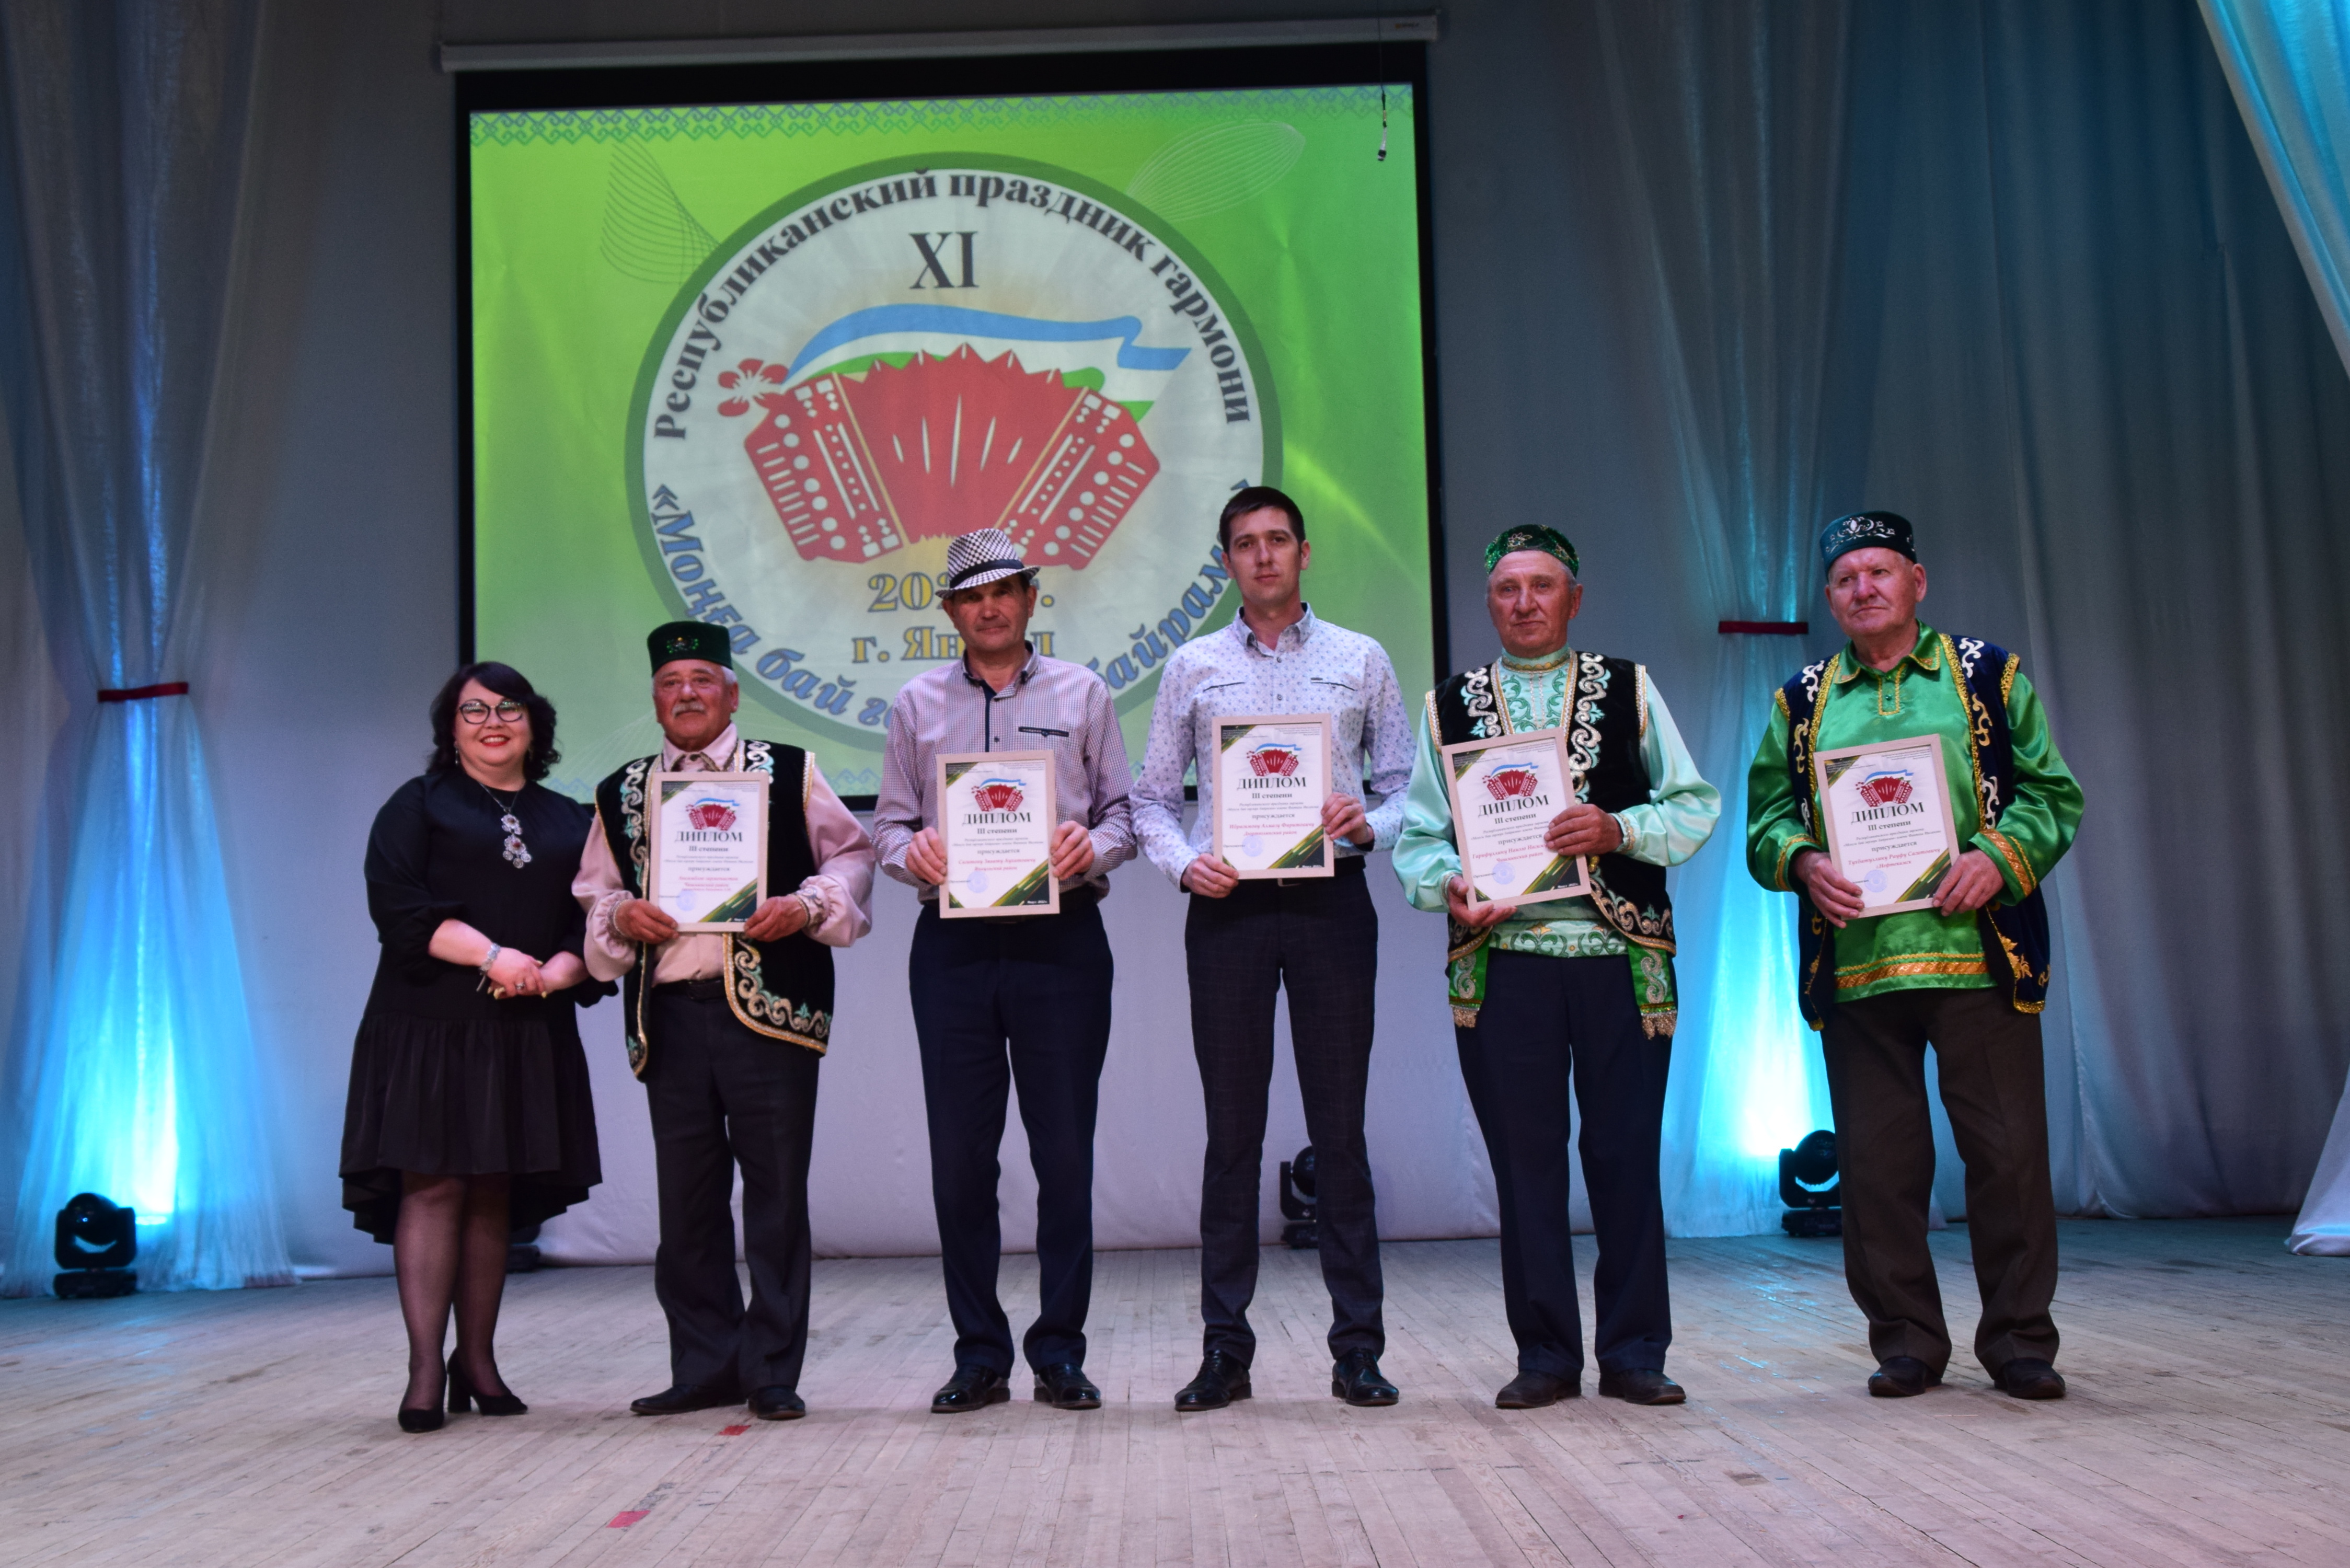 В Башкирии гармонистов приглашают к участию в конкурсе «Моңға бай гармун байрамы»